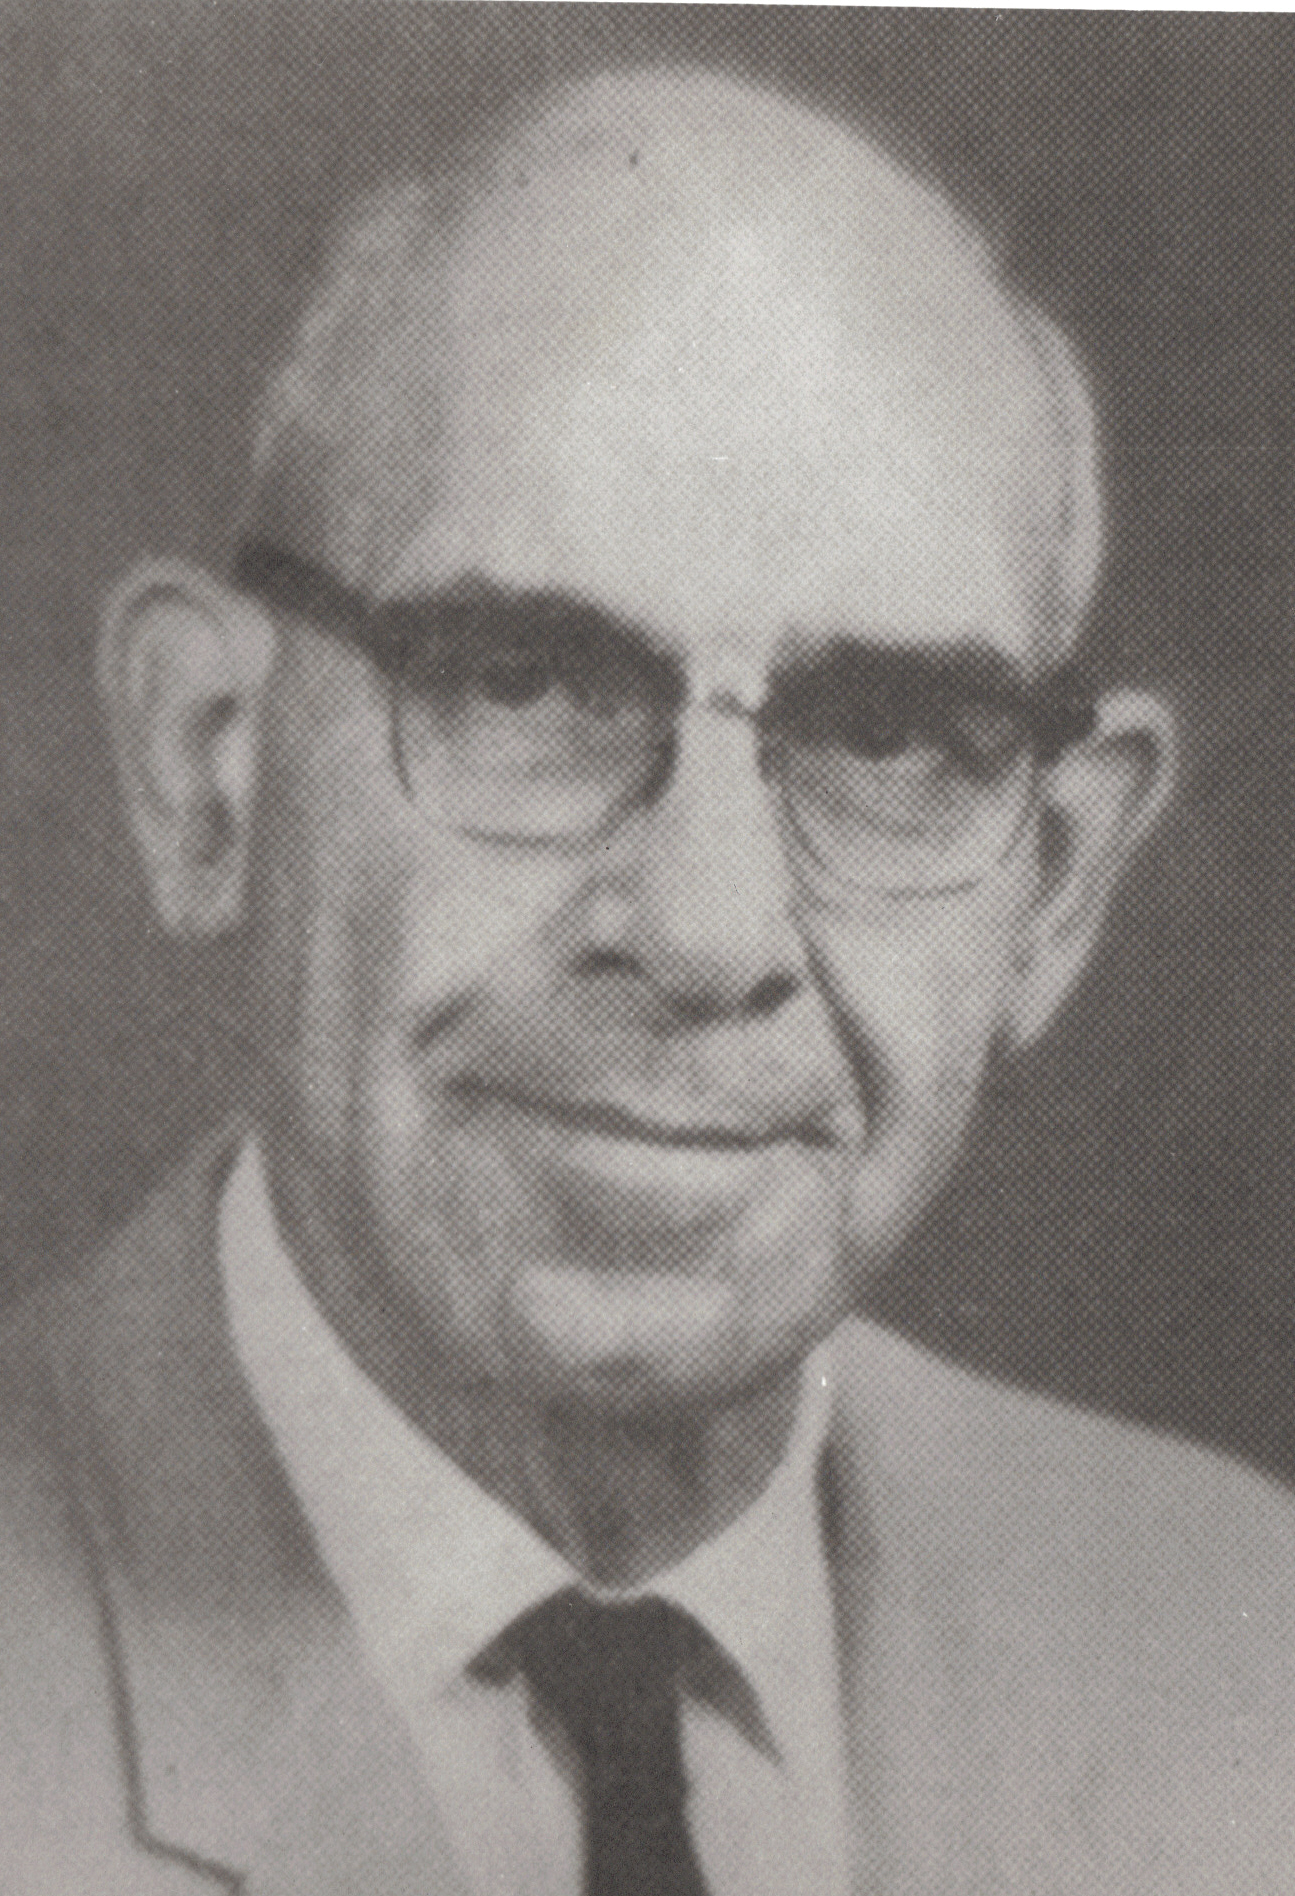 A.S. Huffman